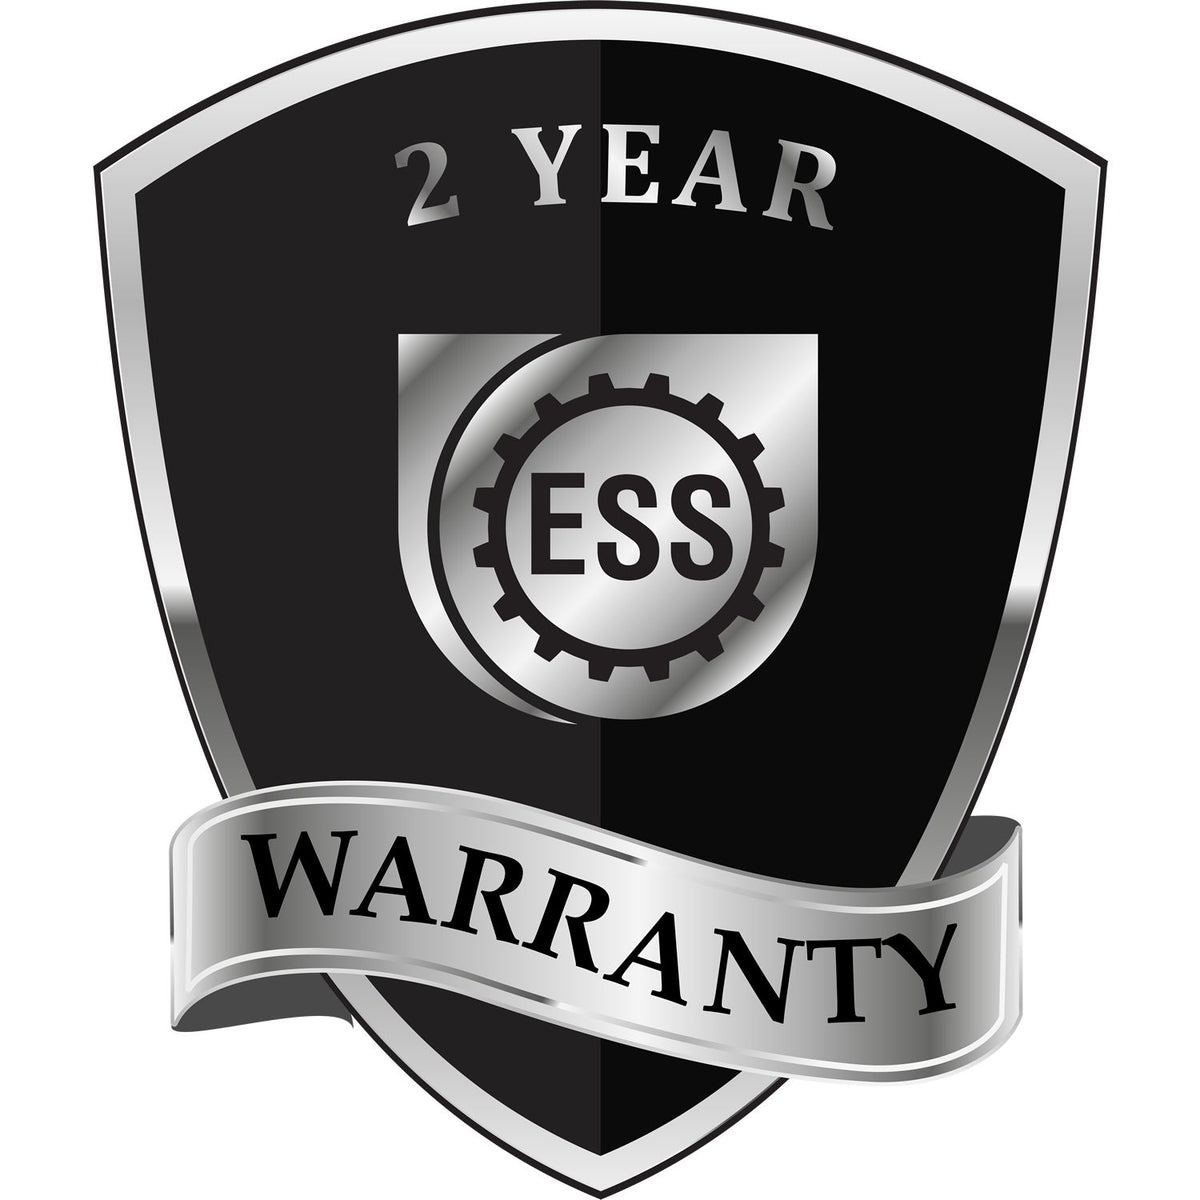 A black and silver badge or emblem showing warranty information for the Gift Guam Land Surveyor Seal